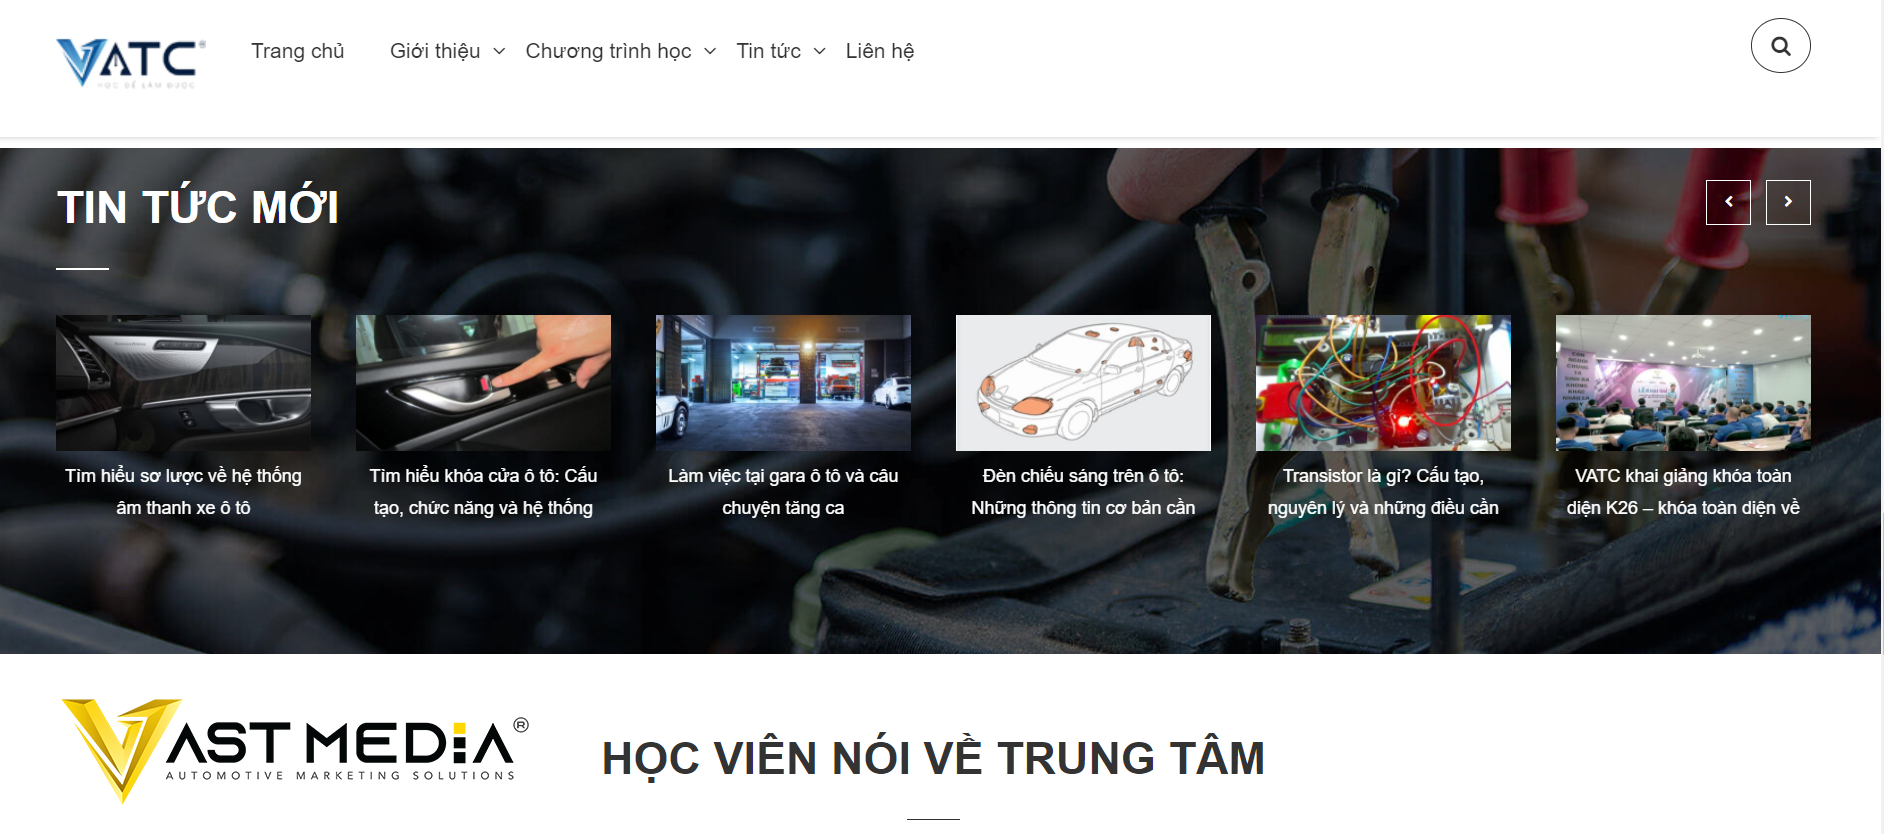 Xây dựng thiết kế Website VATC bởi Vast Media 